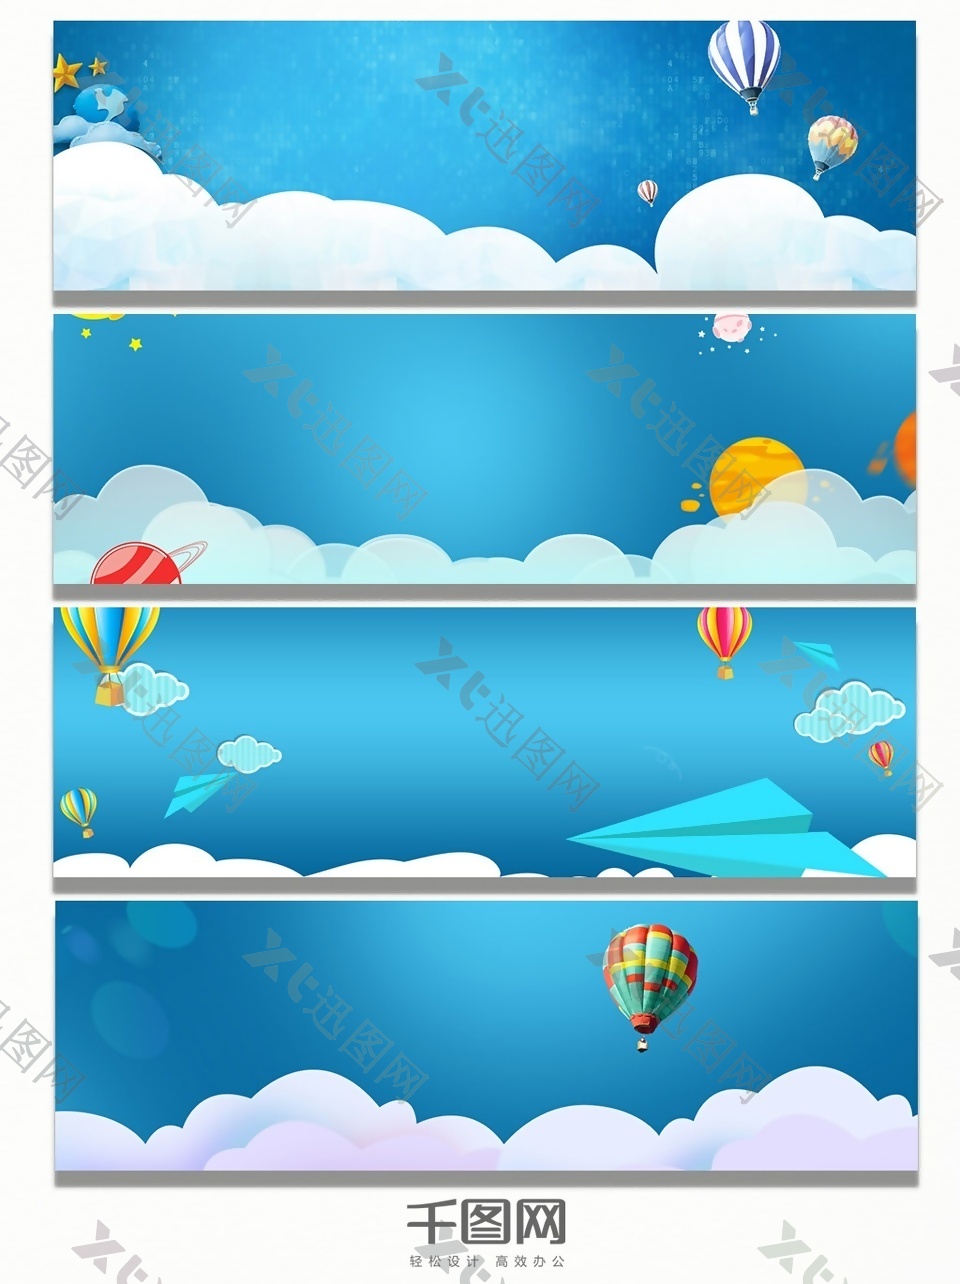 纸风筝热气球卡通banner背景